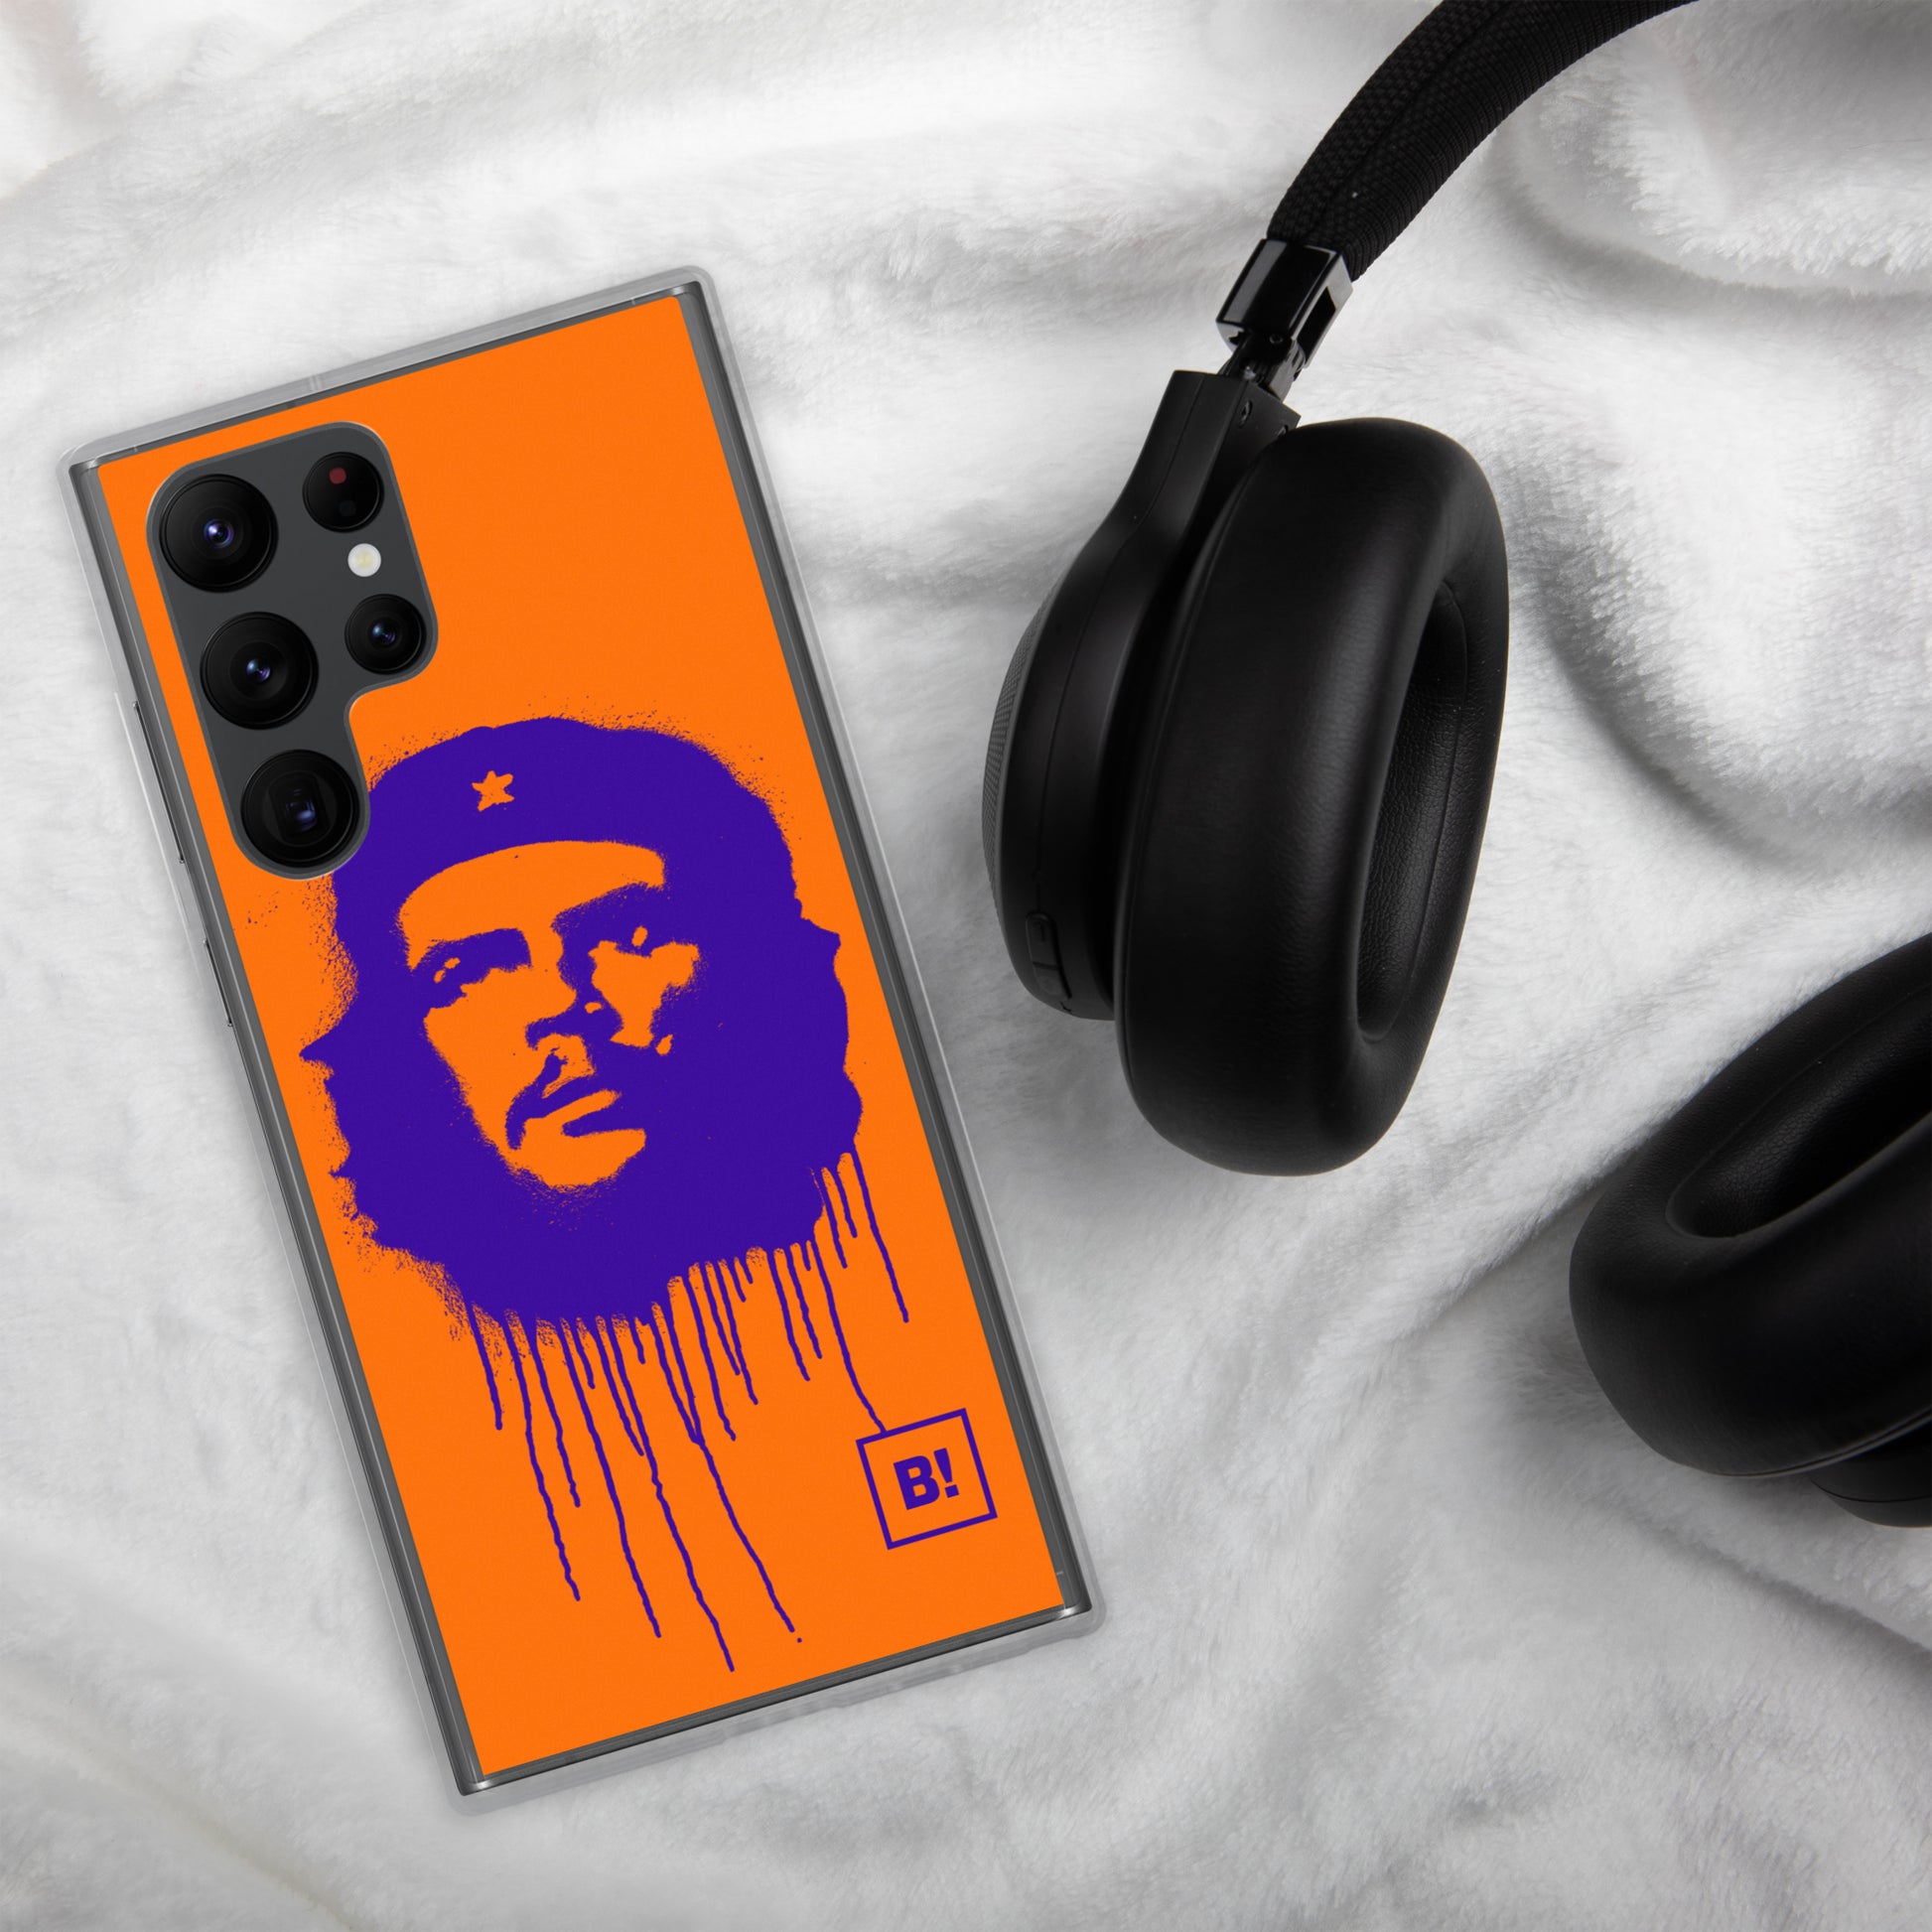 Binspired Ernesto "Che" Guevara - Pop Navy - Samsung Galaxy s22 Ultra Lifestyle